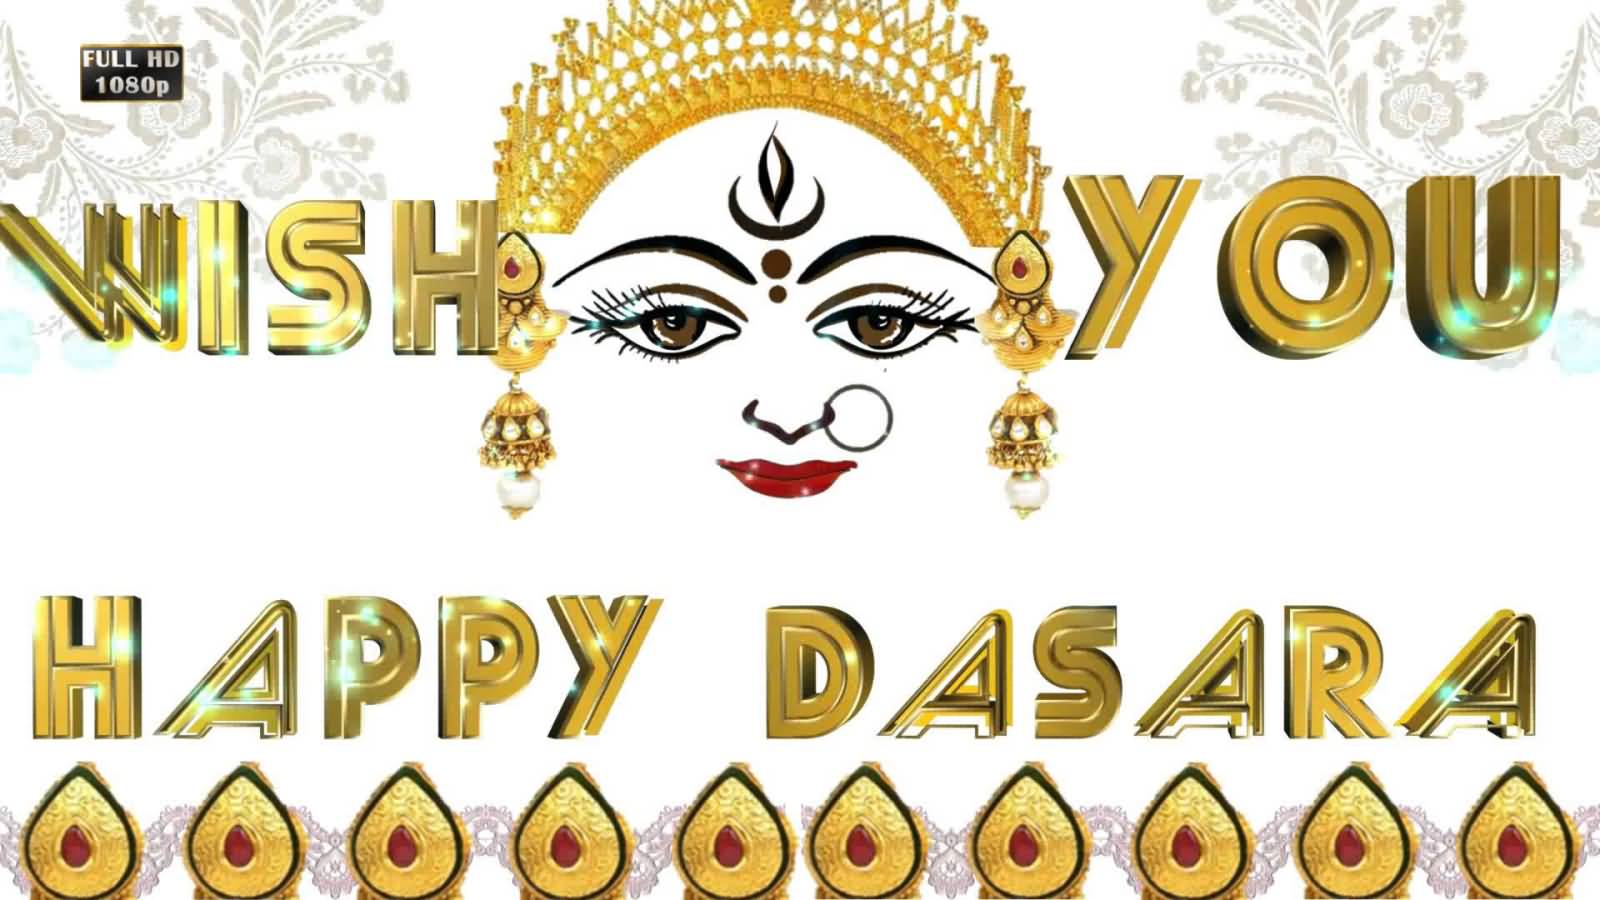 Wish You Happy Dasara 2016 Picture